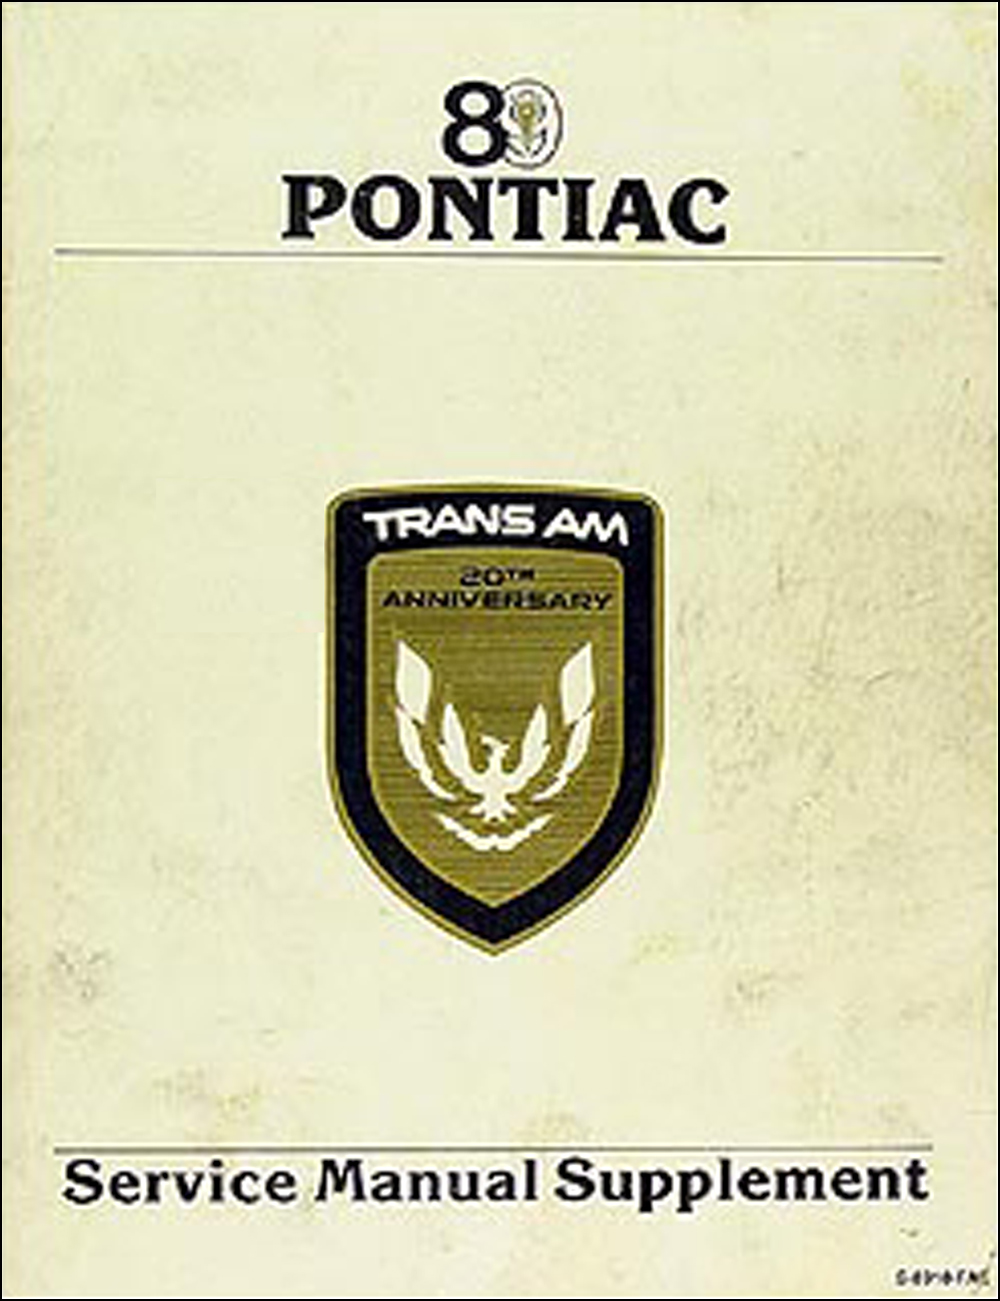 1989 Pontiac 20th Anniversary Trans Am Repair Shop Manual Supplement